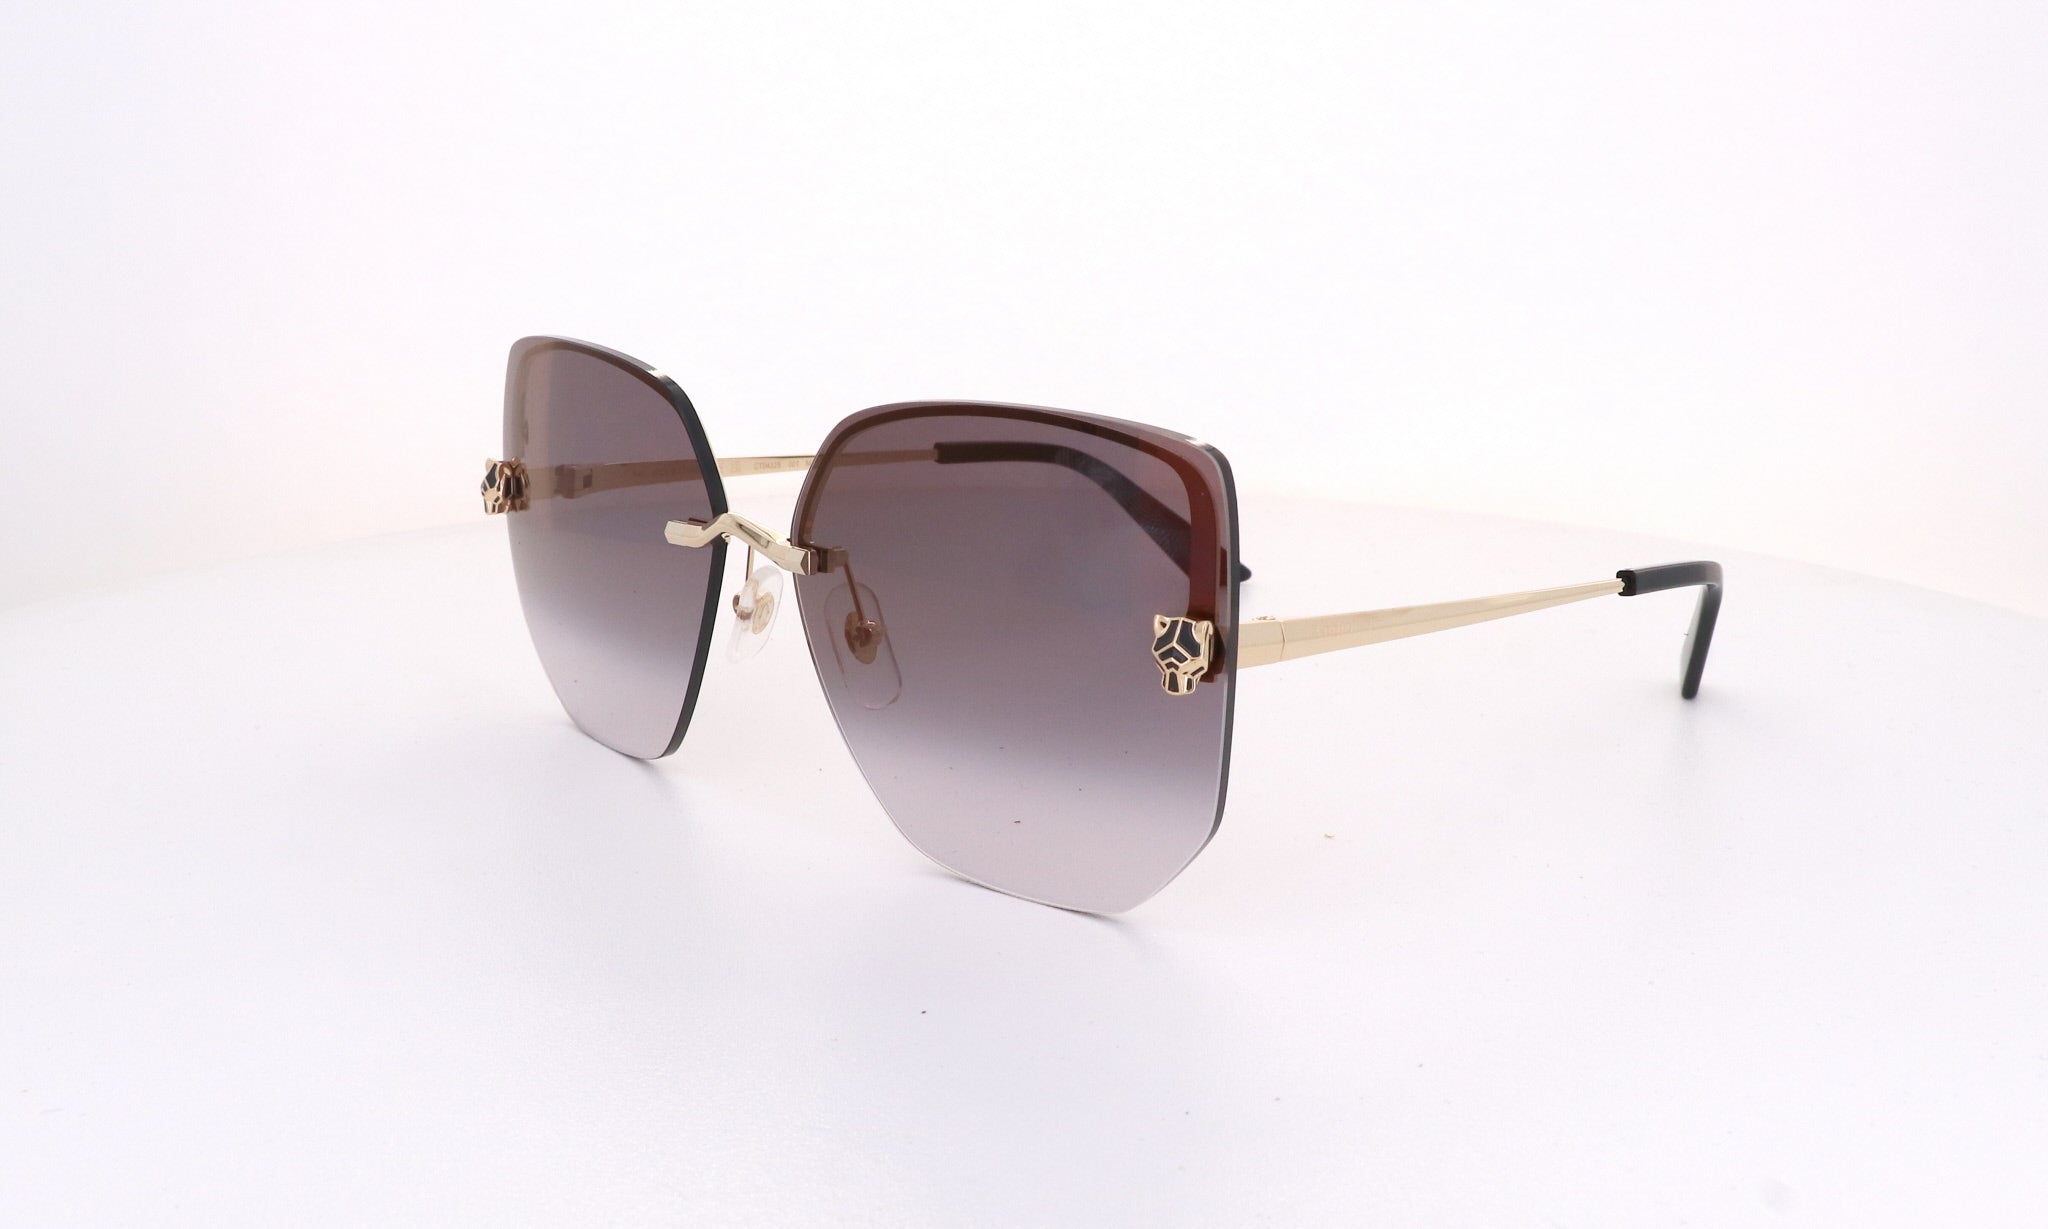 FEISEDY Classic Rimless Sunglasses Women Metal Frame Diamond Cutting Lens  Sun Glasses B2567 - Walmart.com